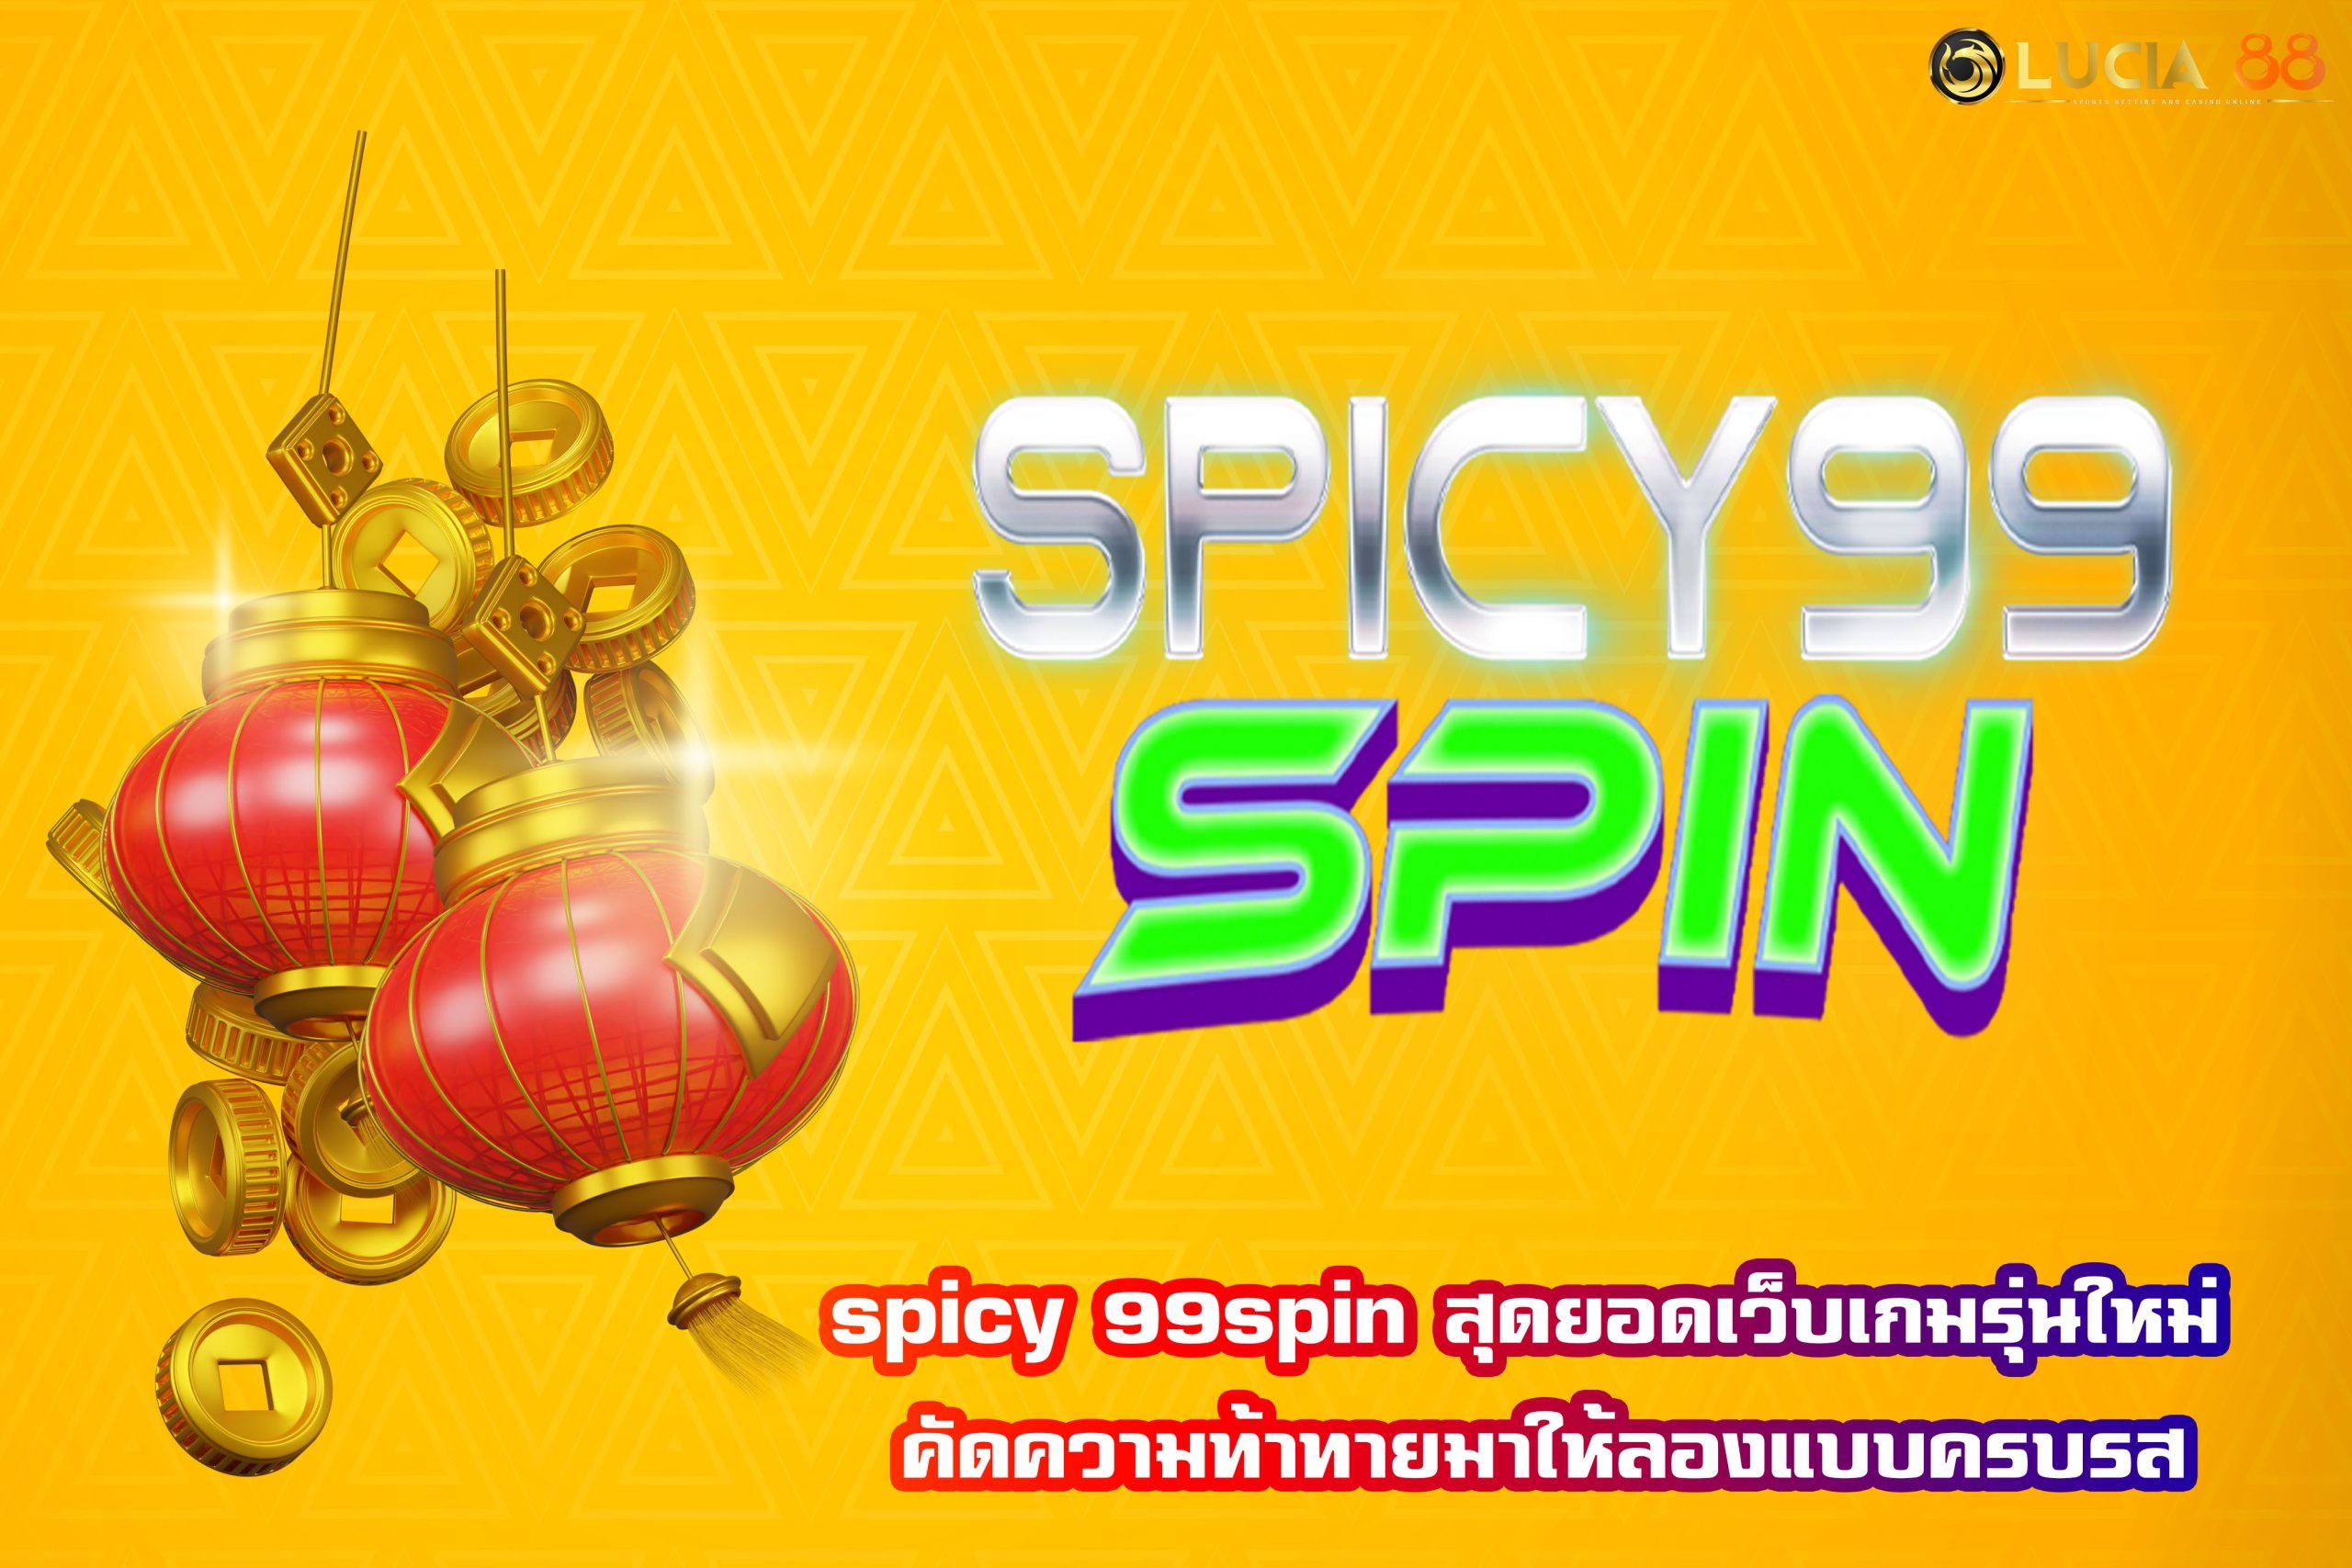 spicy 99spin สุดยอดเว็บเกมรุ่นใหม่ คัดความท้าทายมาให้ลองแบบครบรส